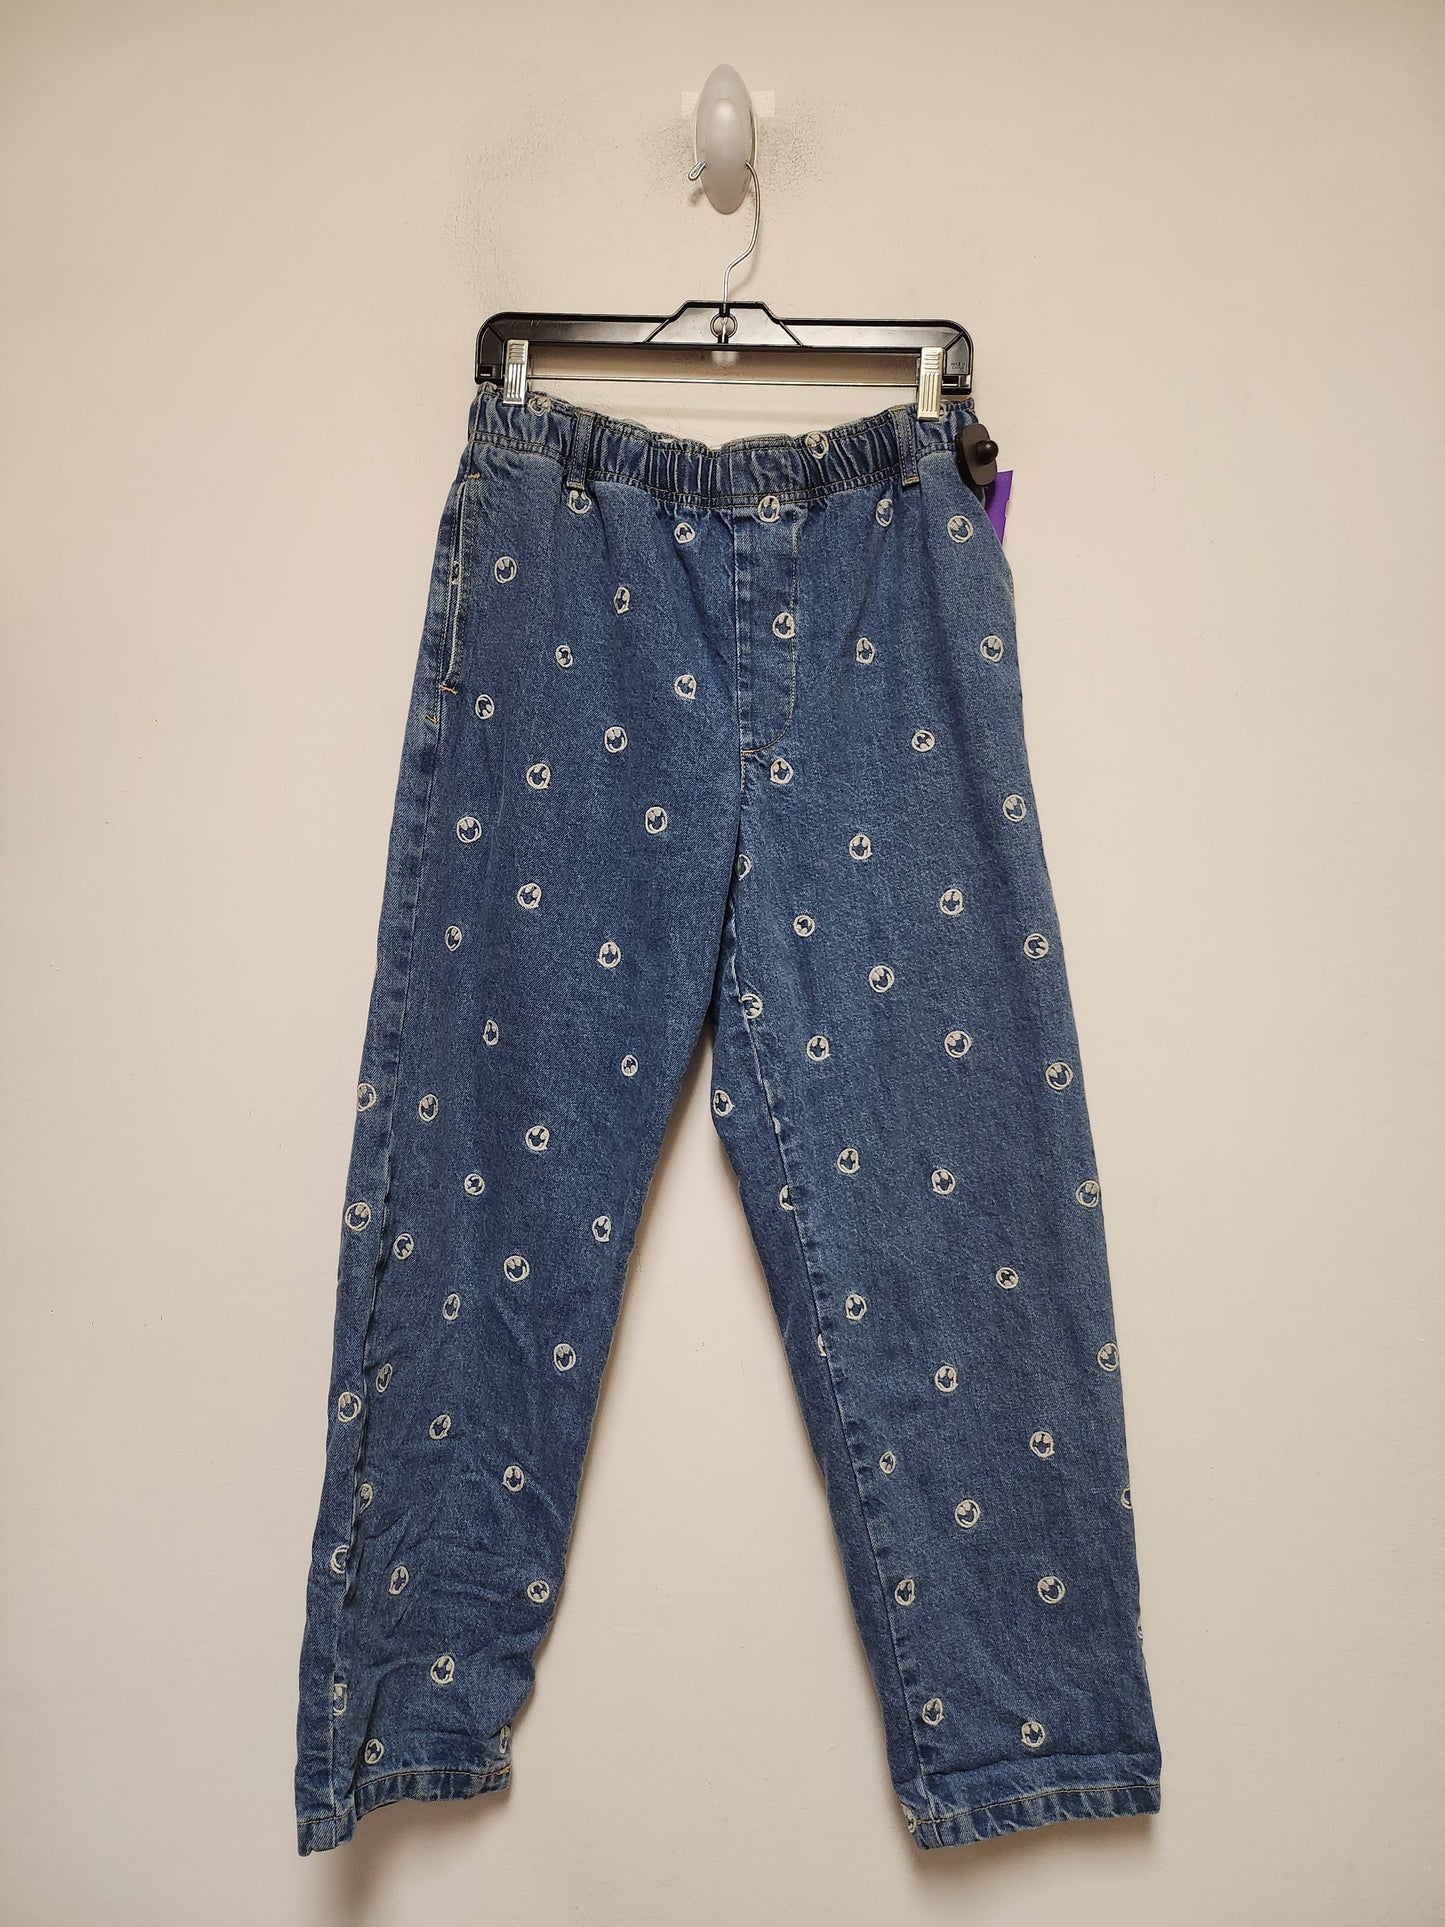 Blue Denim Jeans Straight Bdg, Size 8